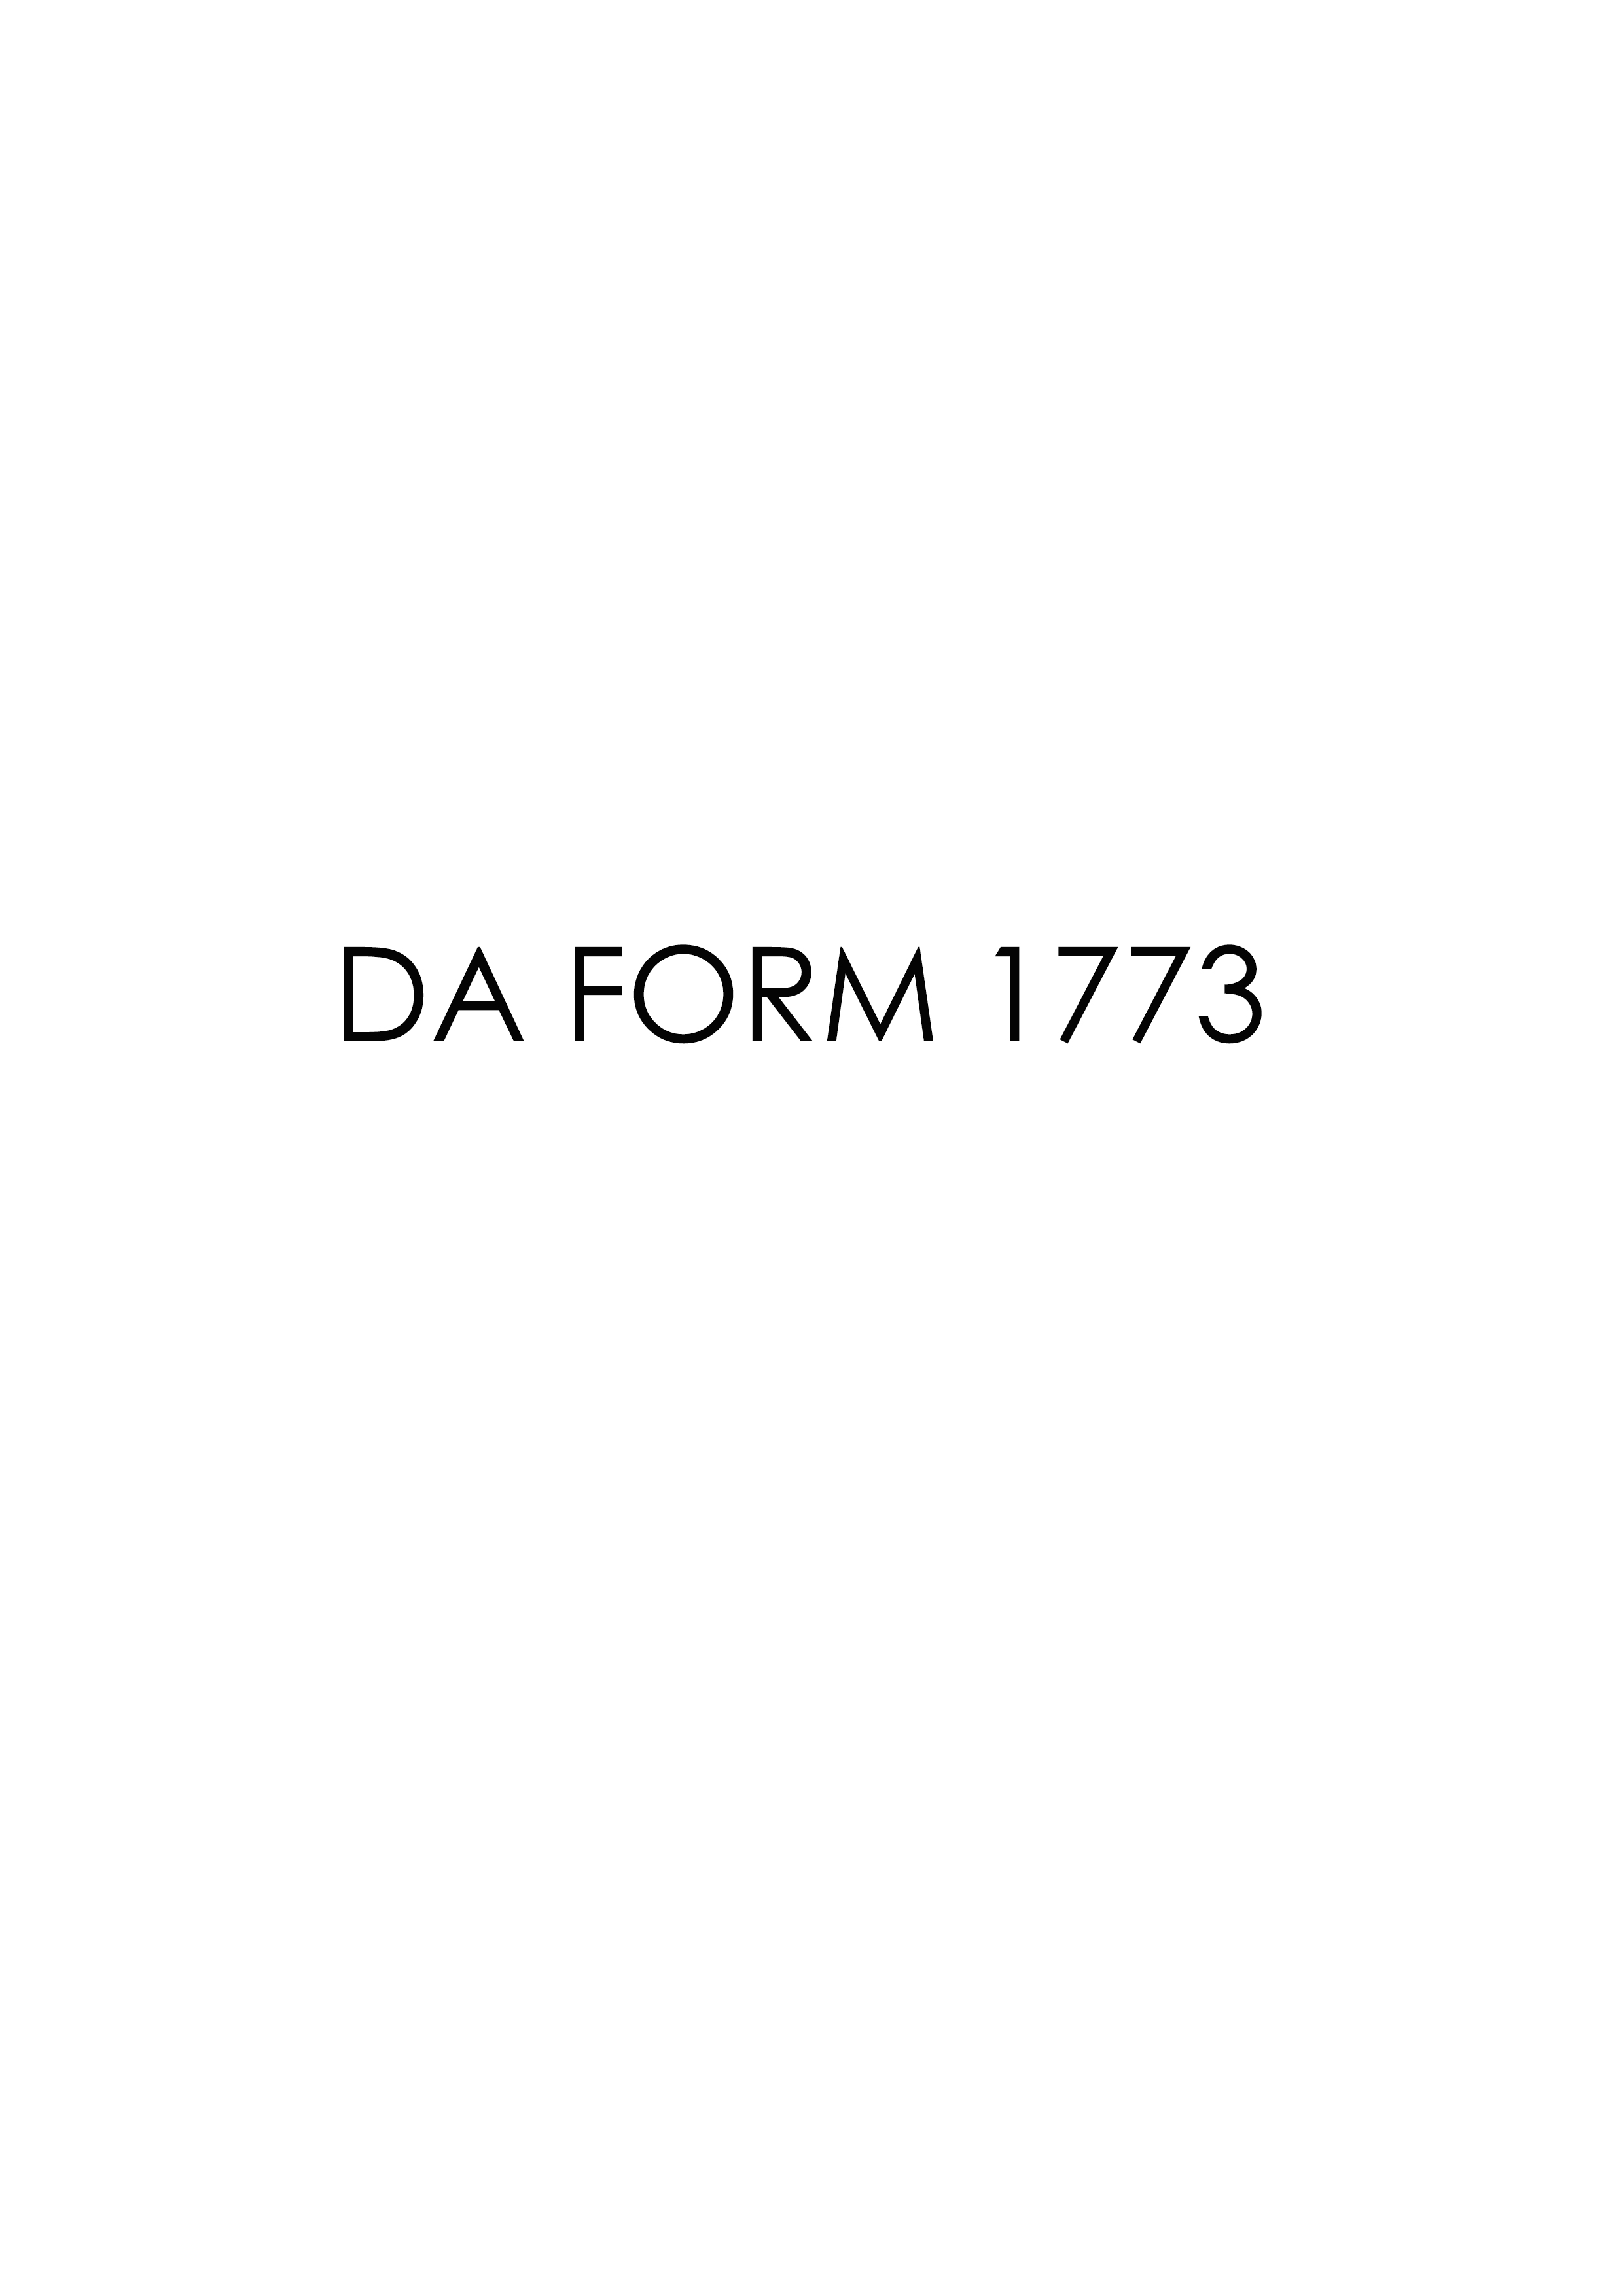 Download da 1773 Form Free